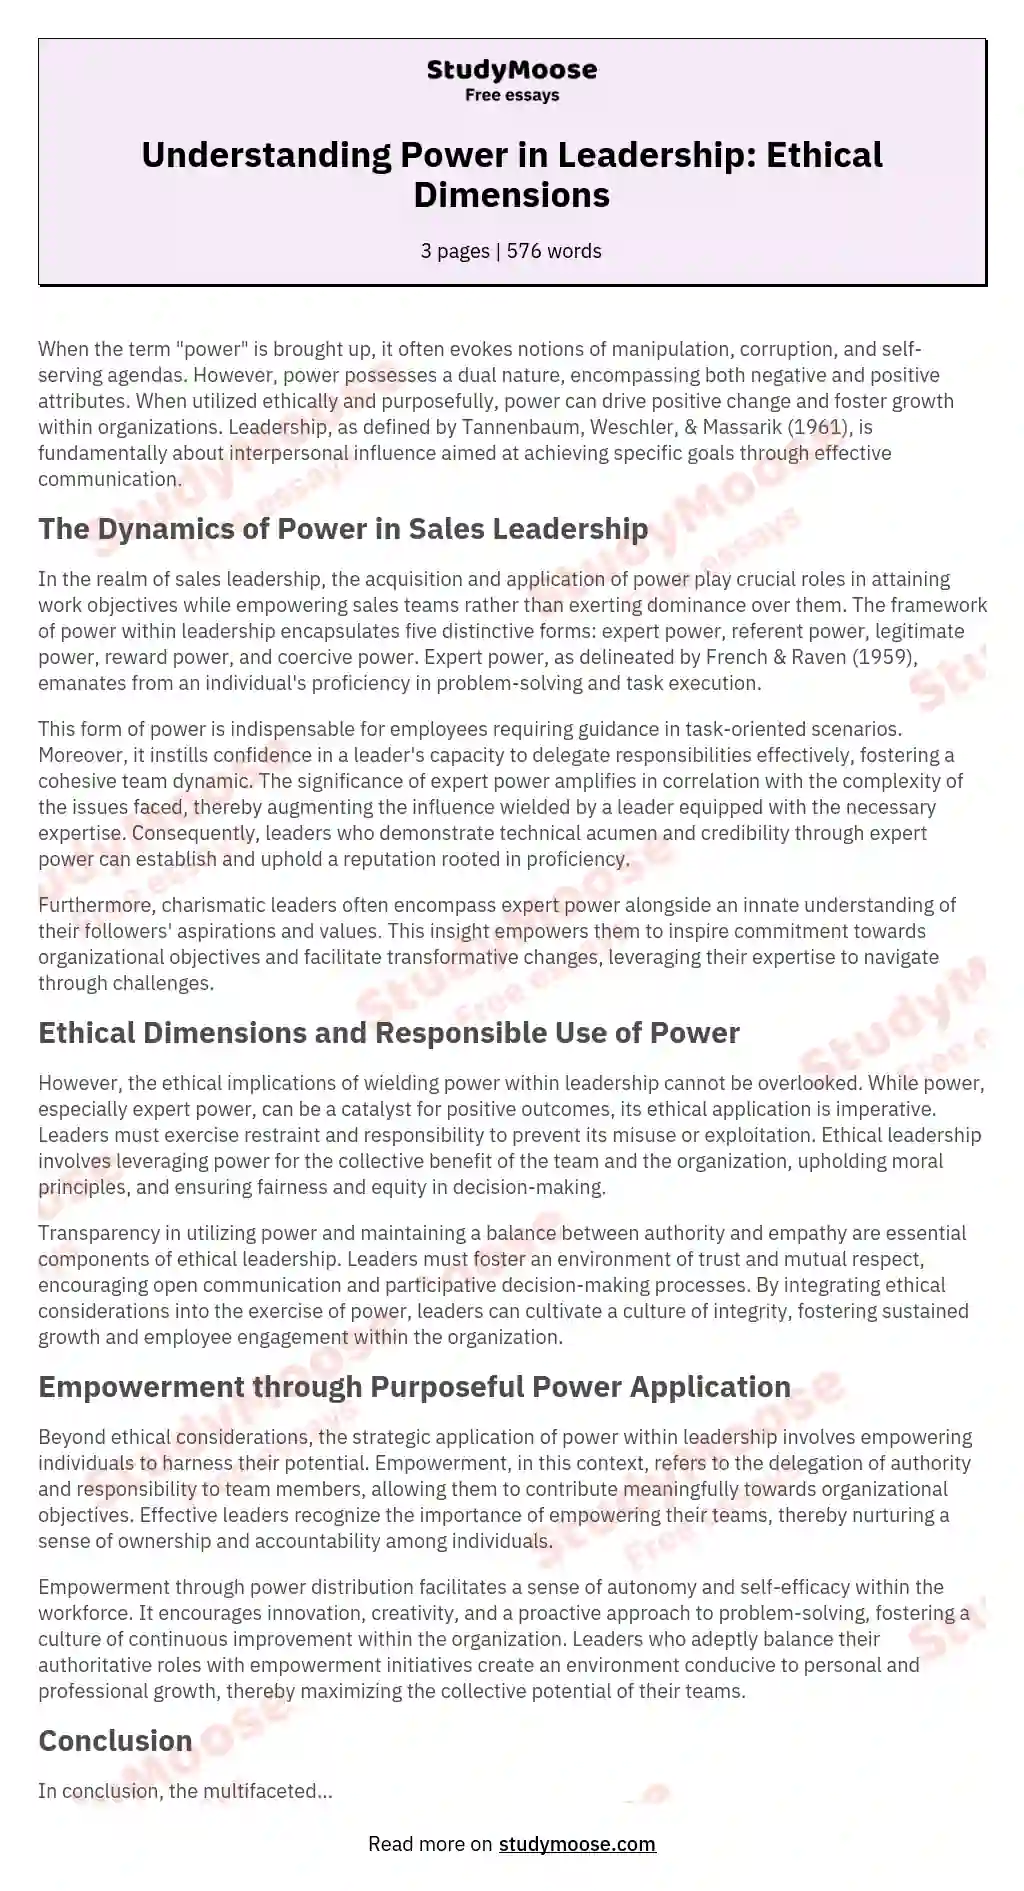 Understanding Power in Leadership: Ethical Dimensions essay